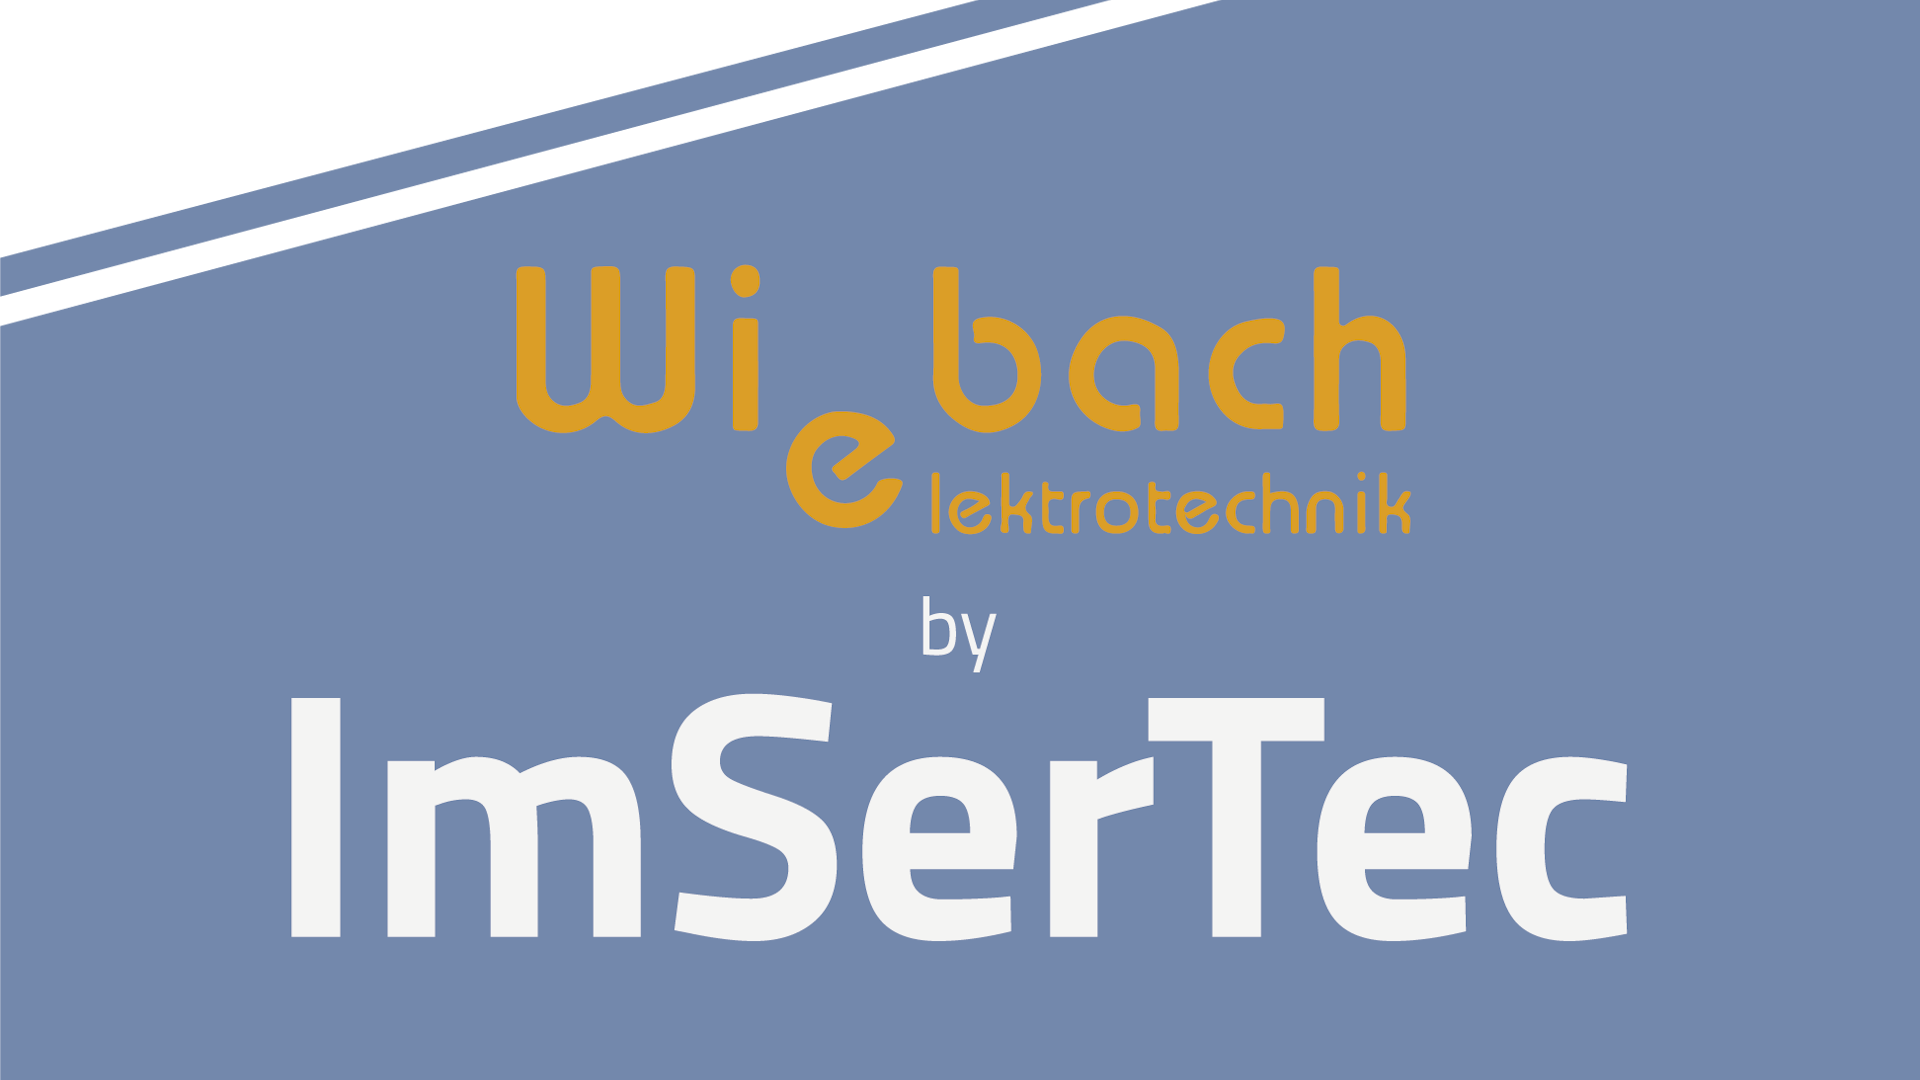 Wiebach